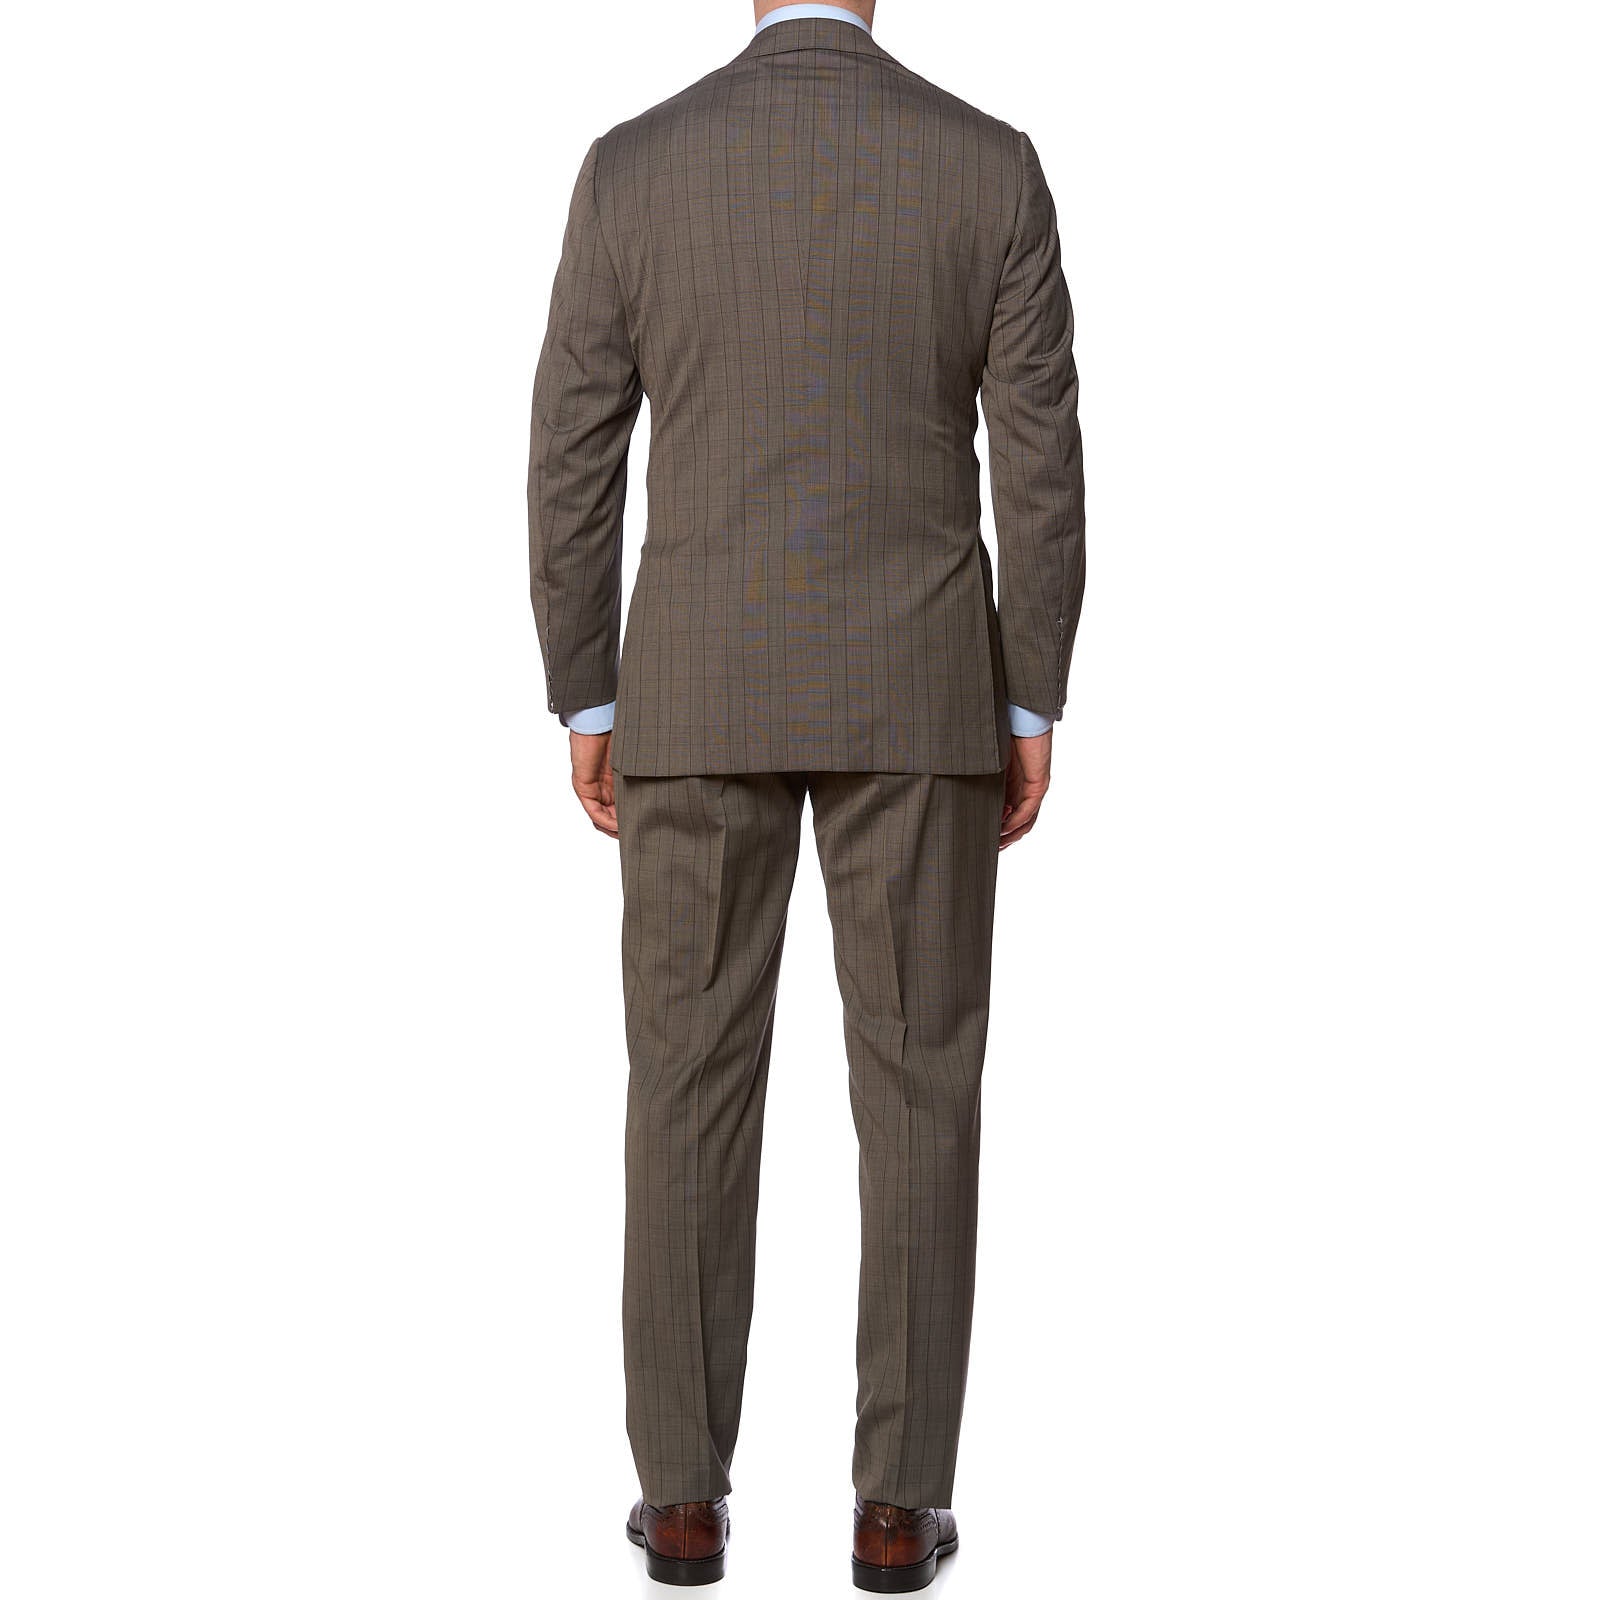 KITON Napoli Gray-Brown Prince of Wales 14 Micron Super 180's Suit EU 50 NEW US 40